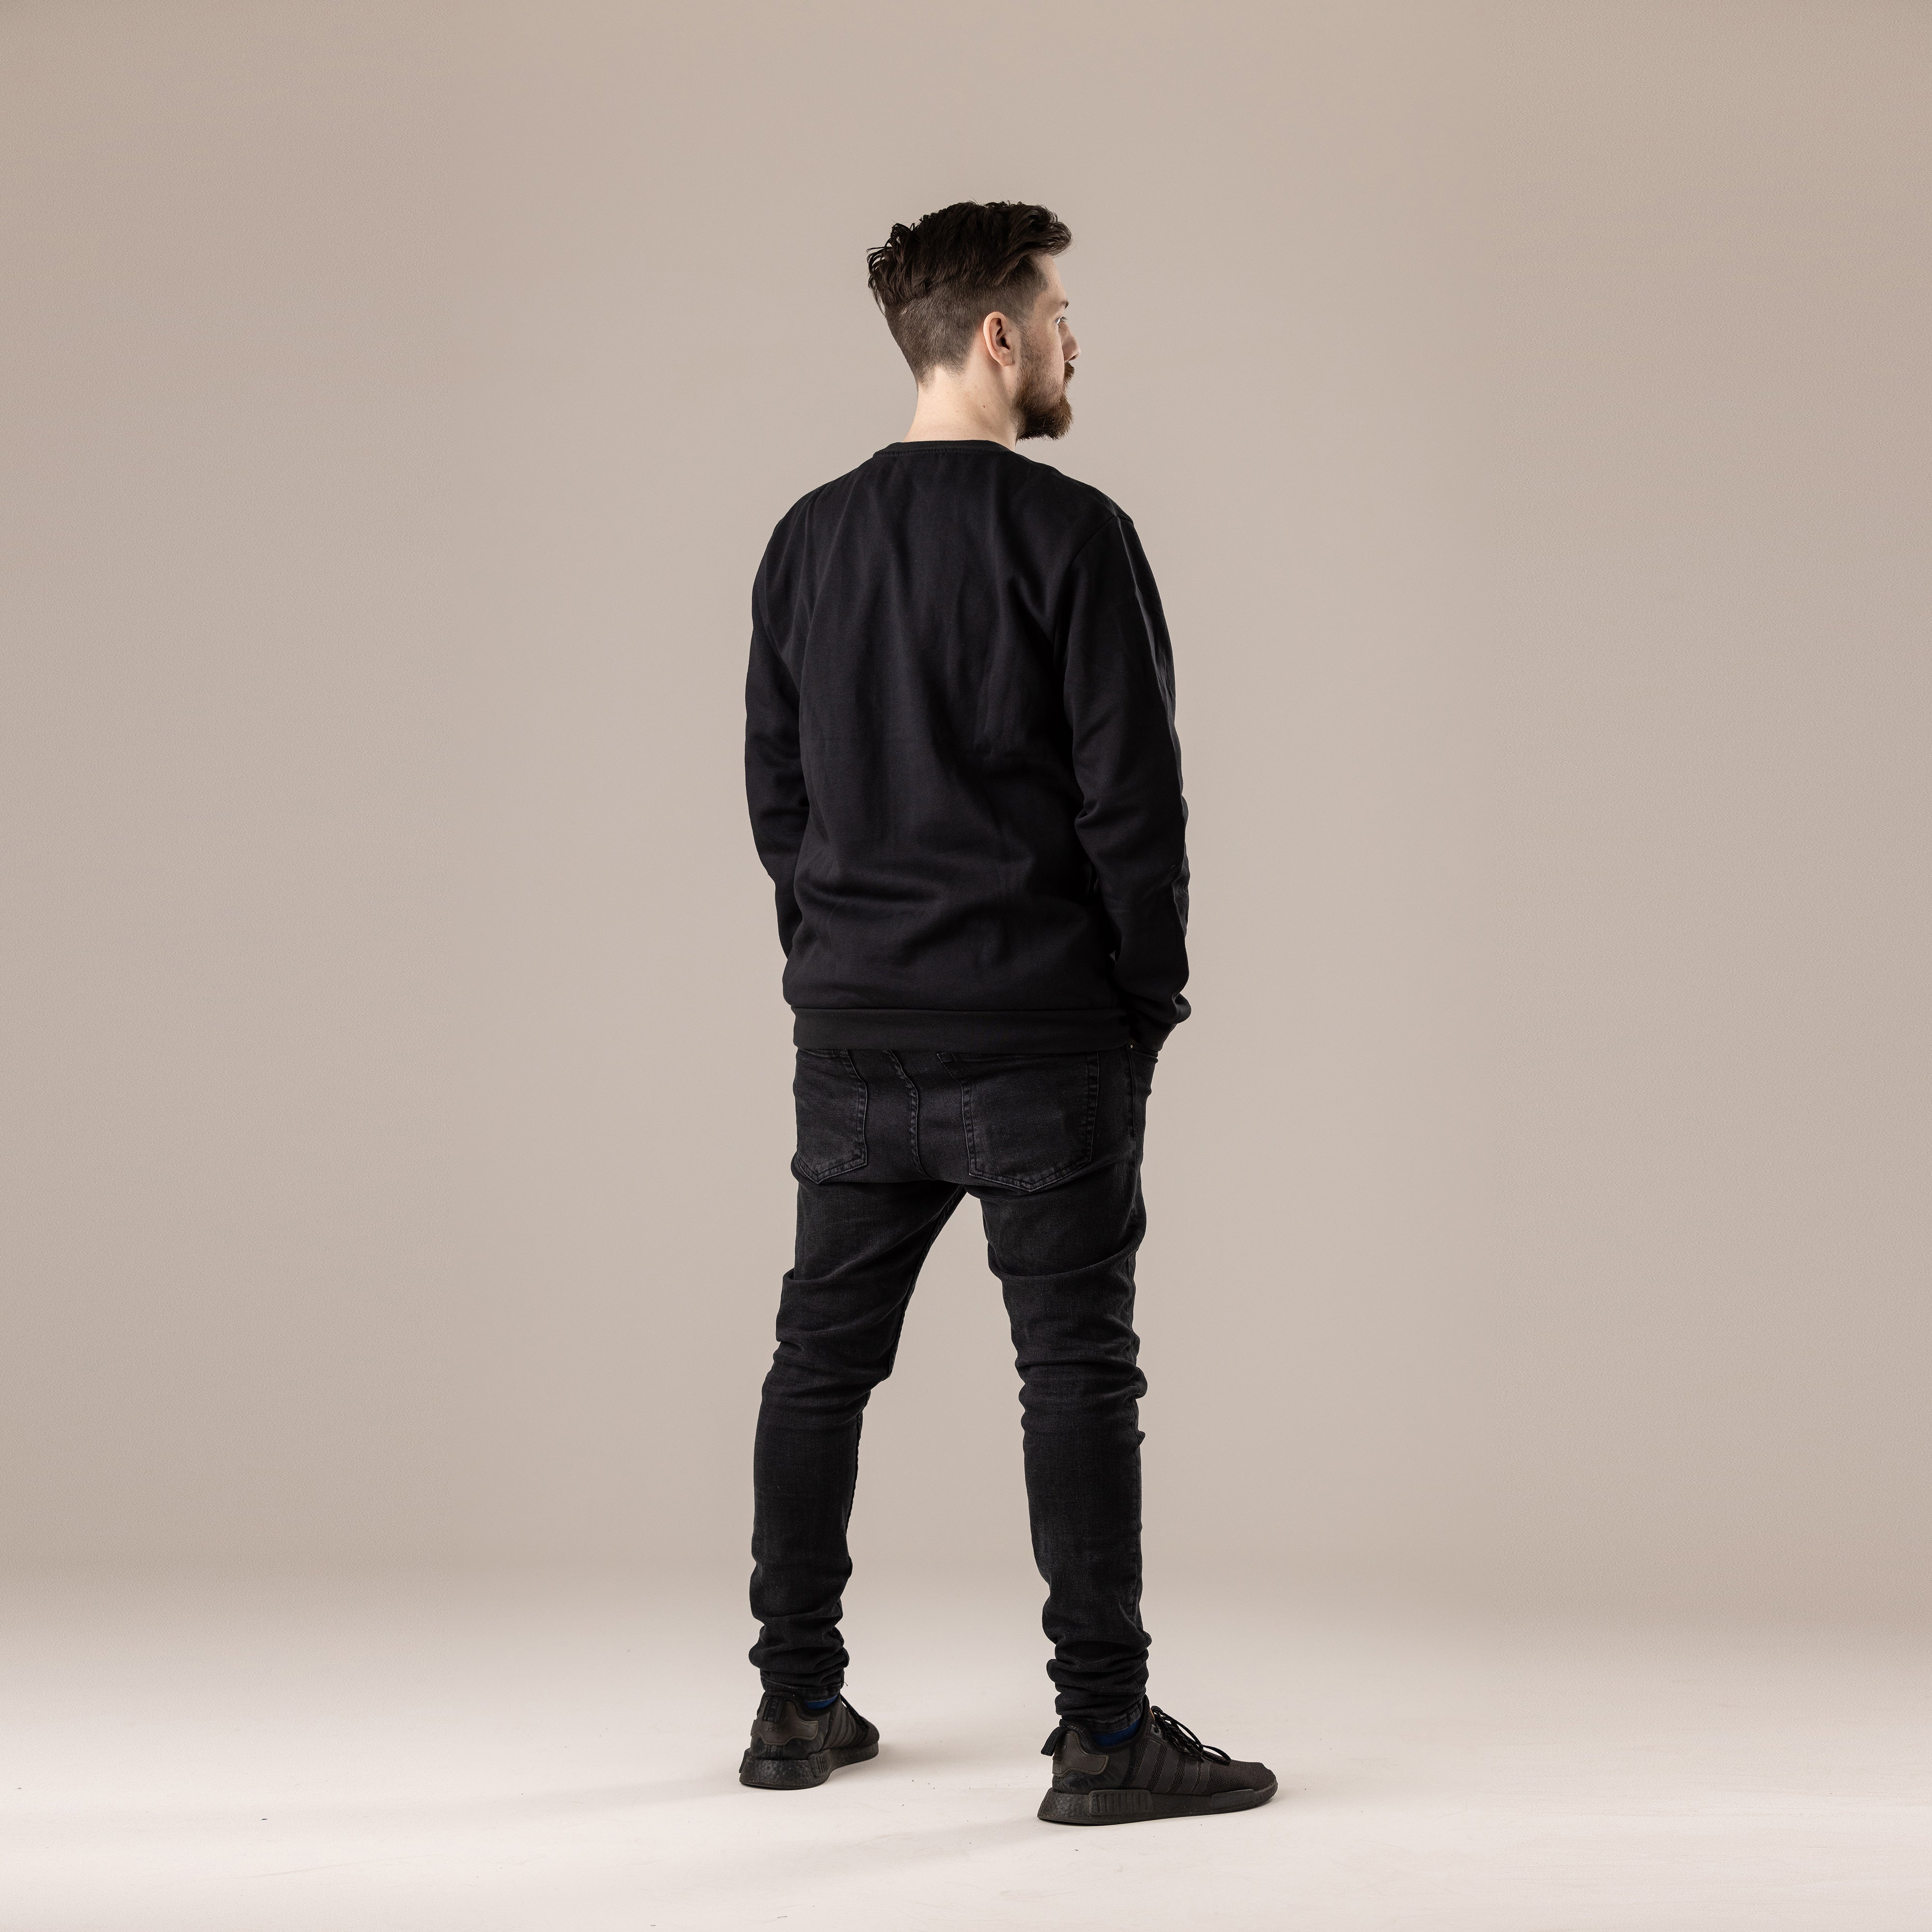 Adidas Easy Line Pullover - Black